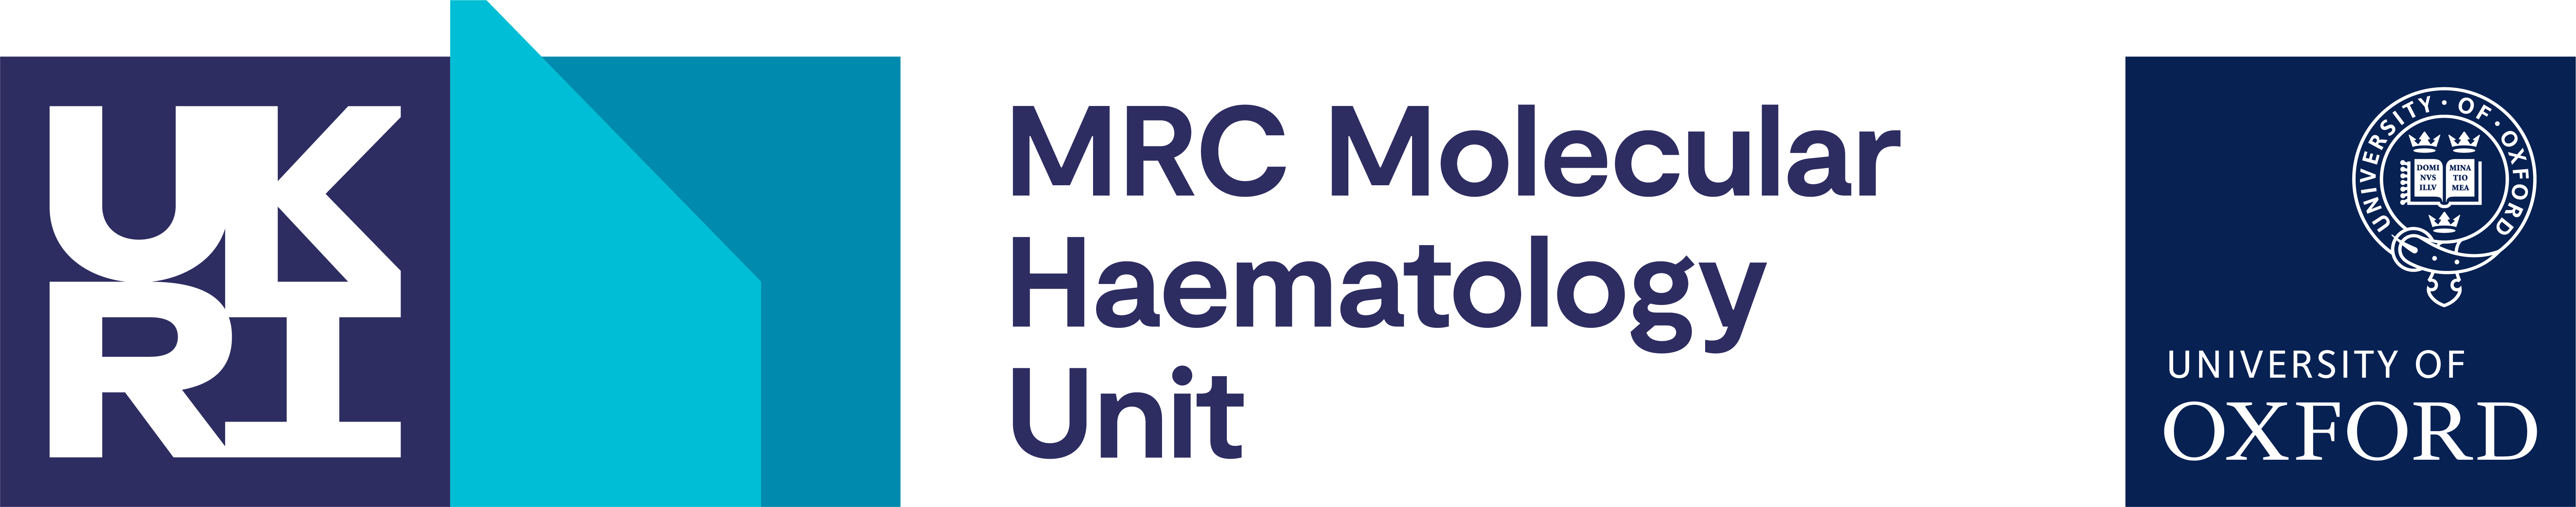 MRC Molecular Haematology Unit logo